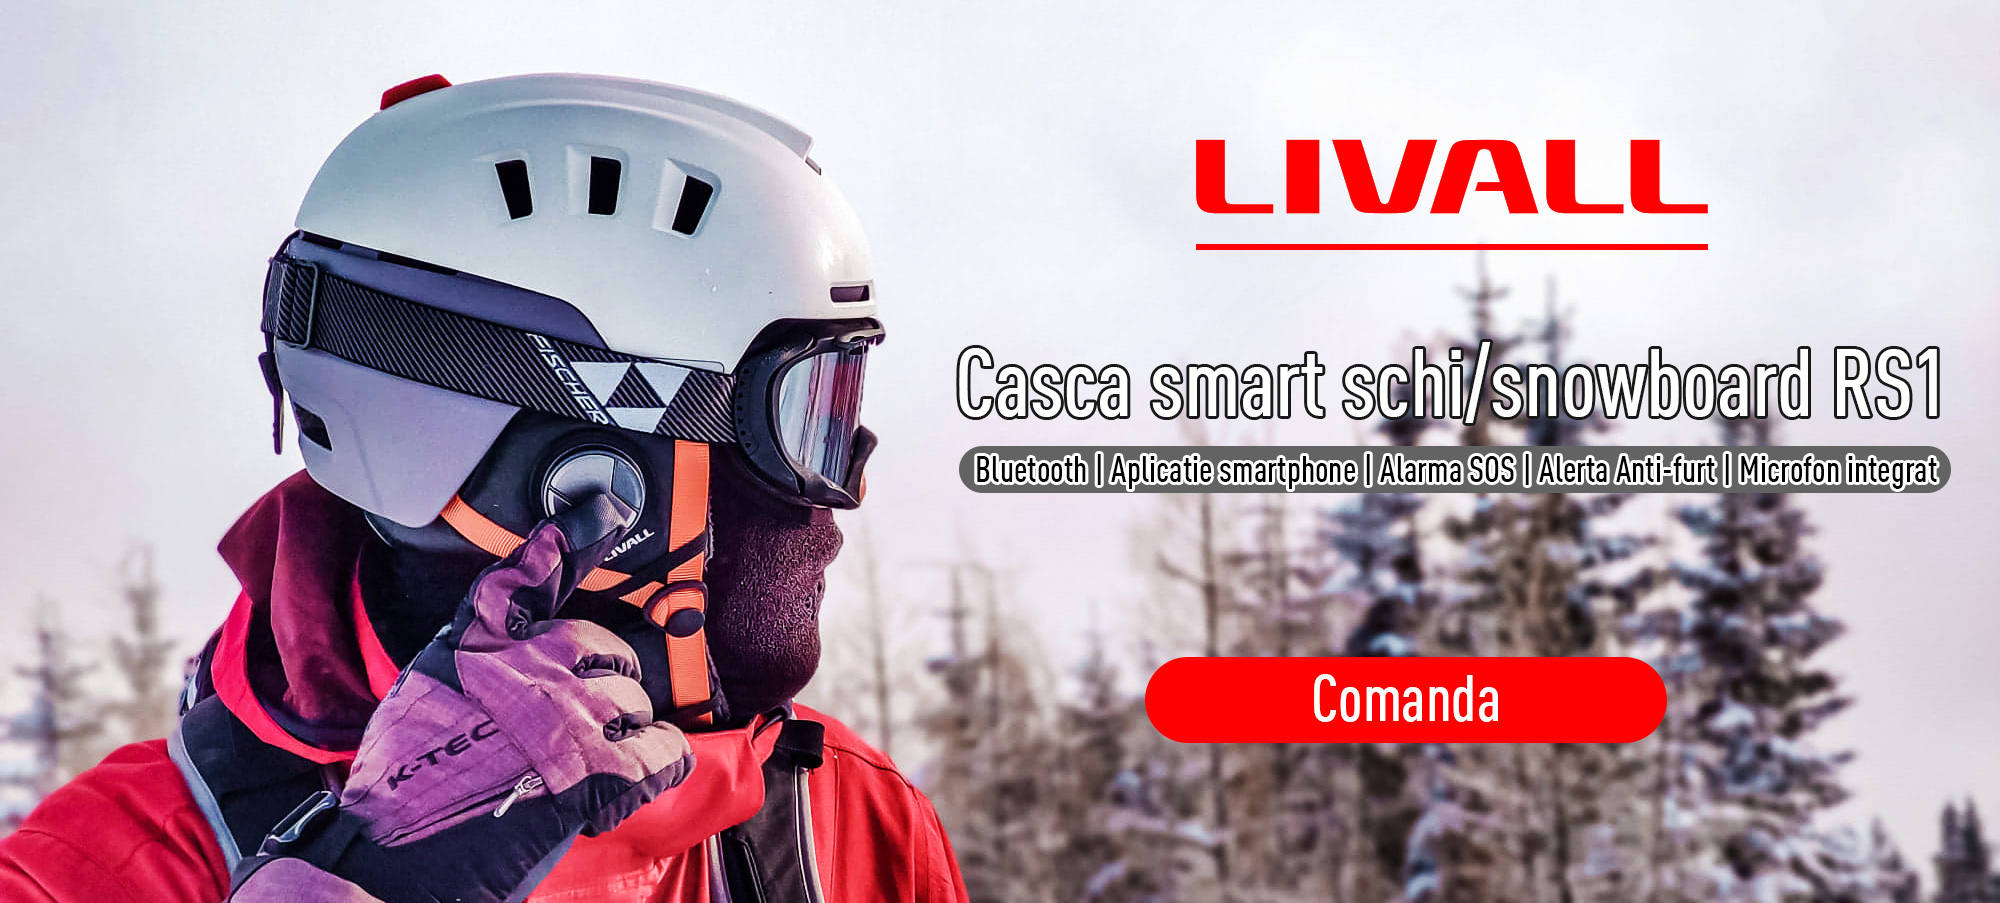 Casca-smart-Livall-RS1-banner1